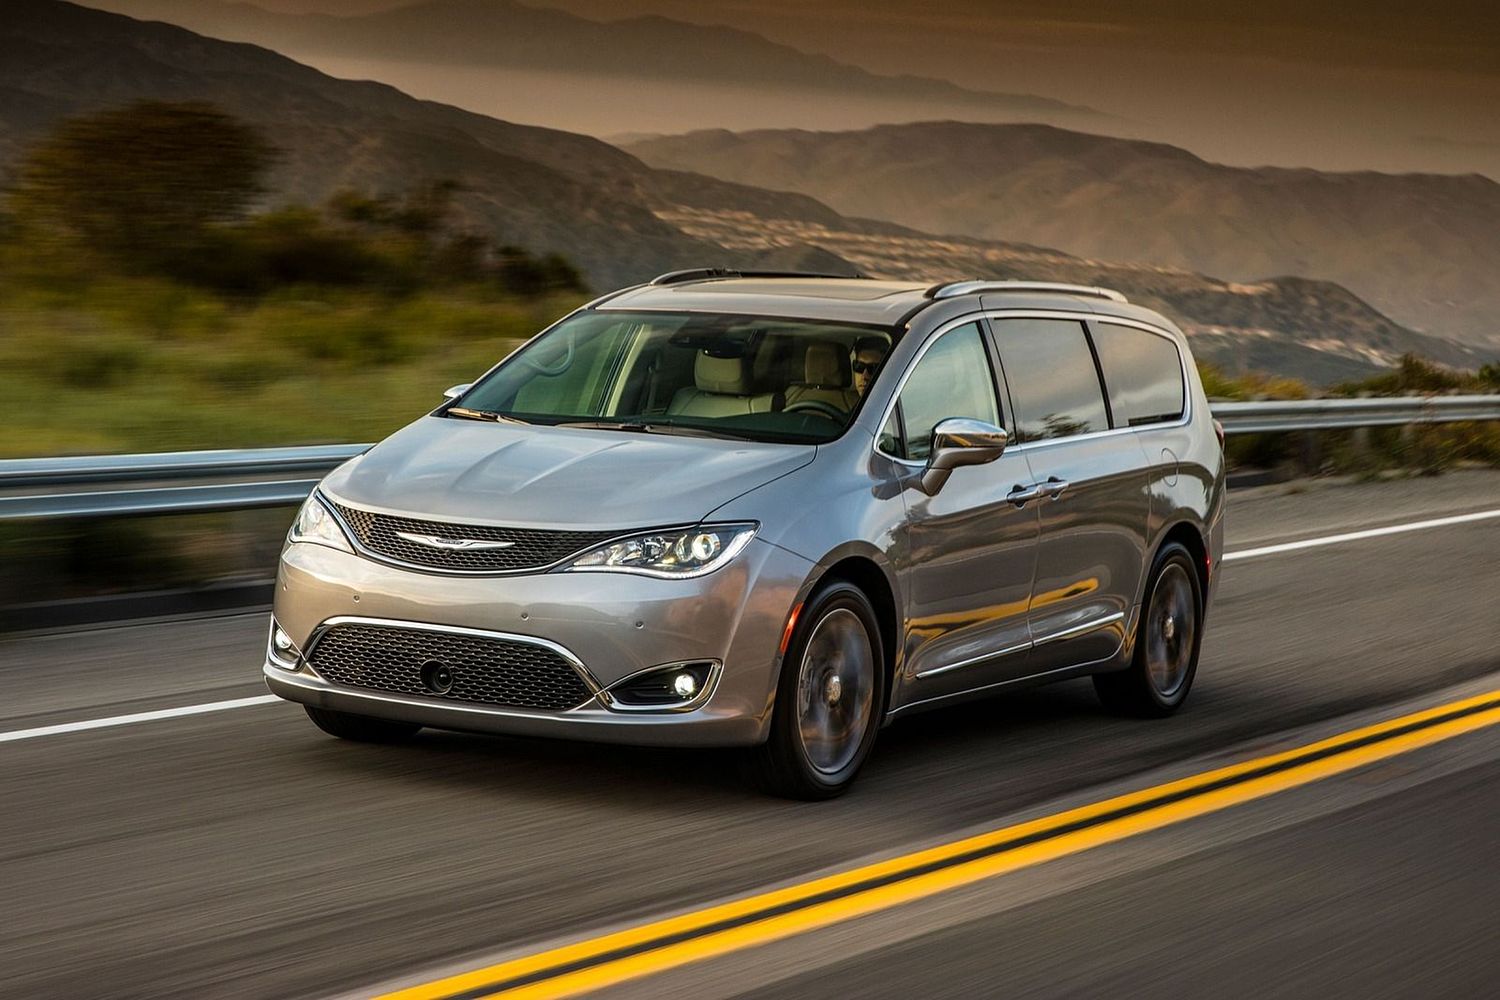 2018 Chrysler Pacifica Limited Passenger Minivan Exterior Shown